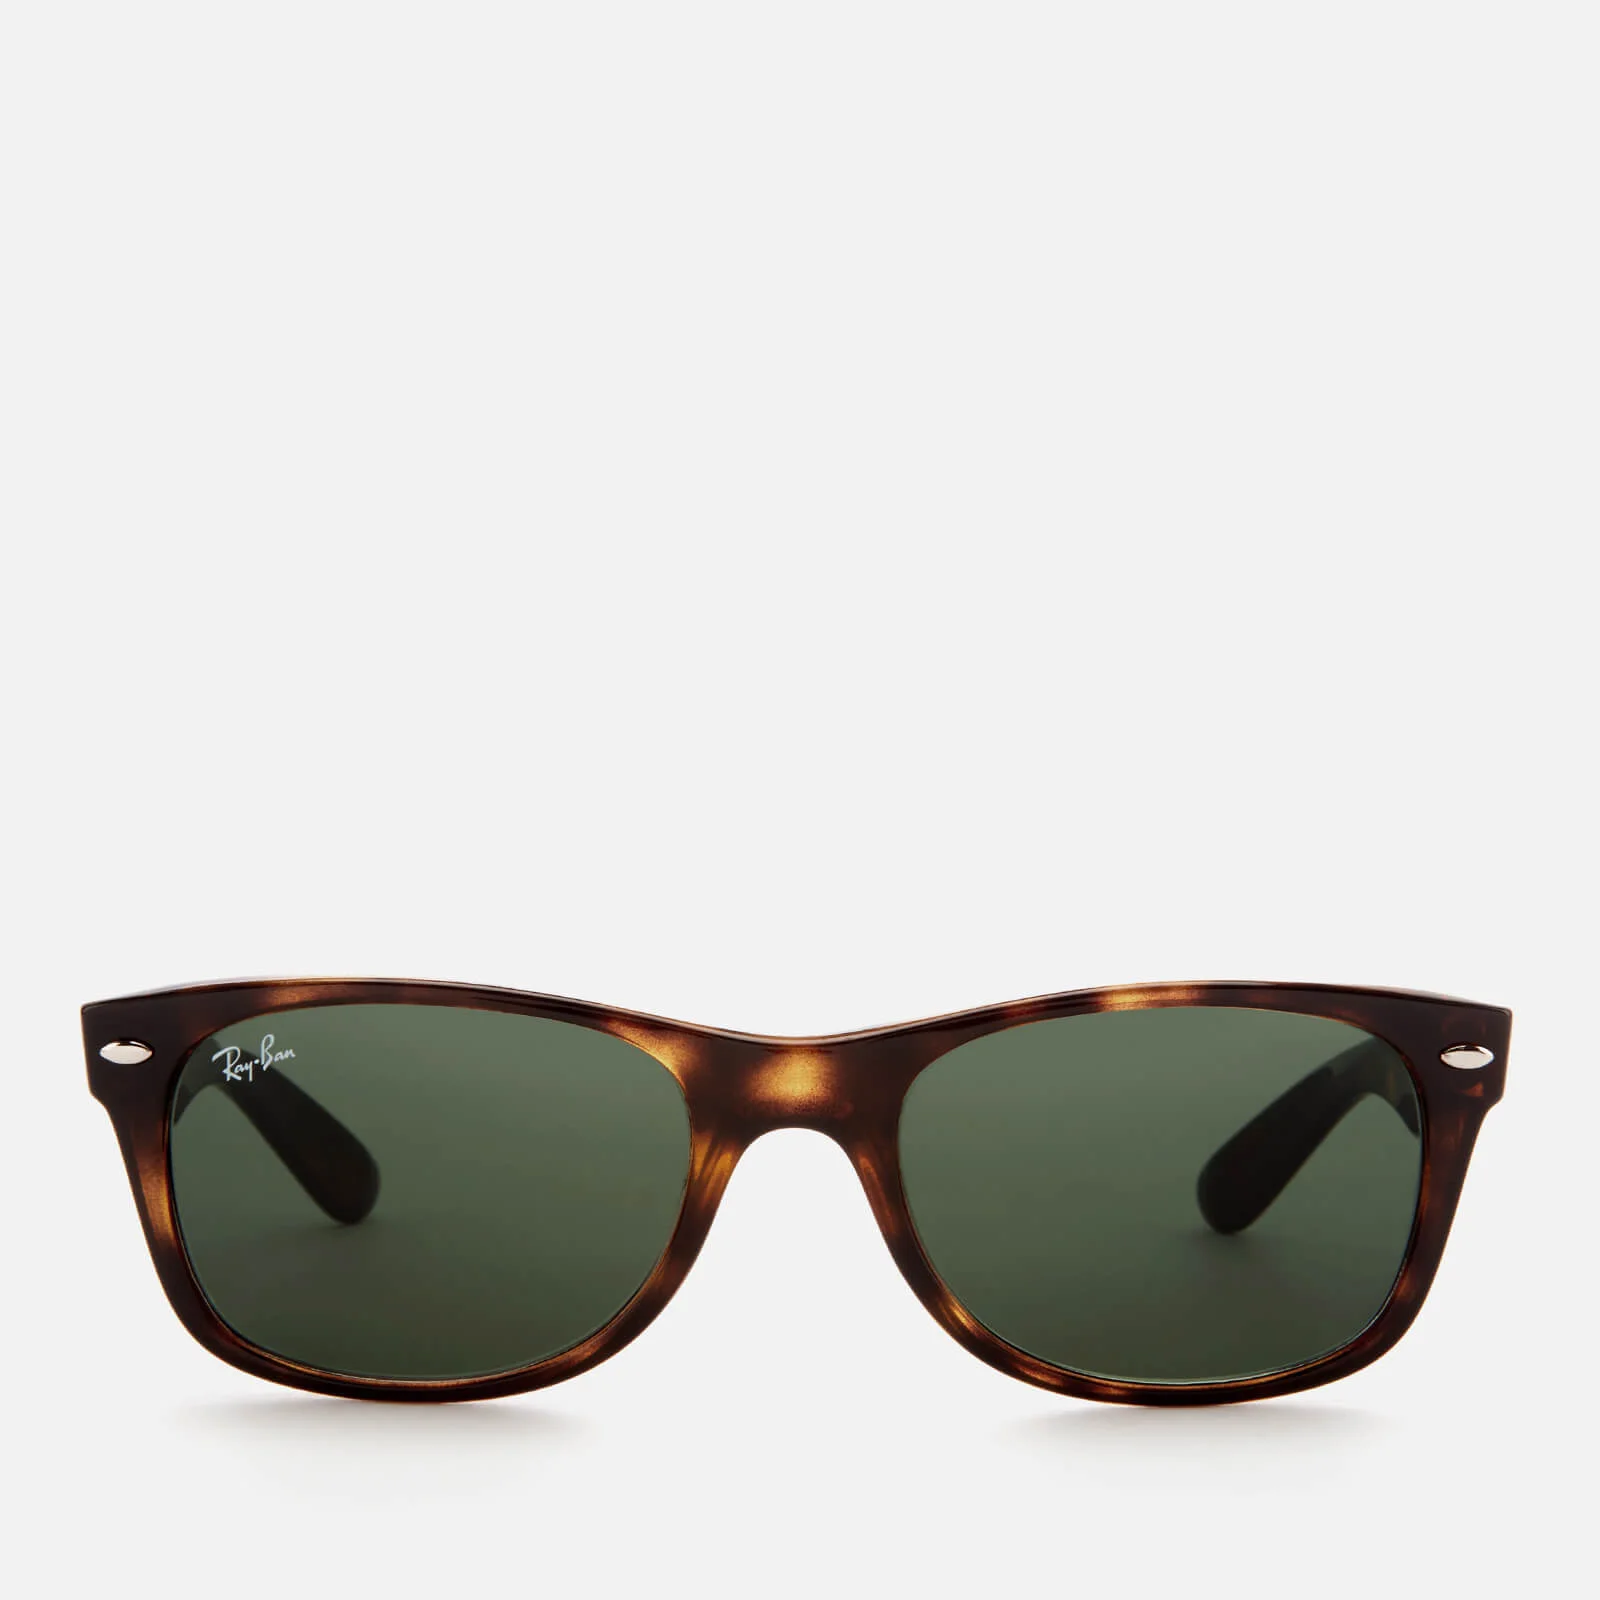 Ray-Ban Men's New Wayfarer Sunglasses - Tortoise Image 1